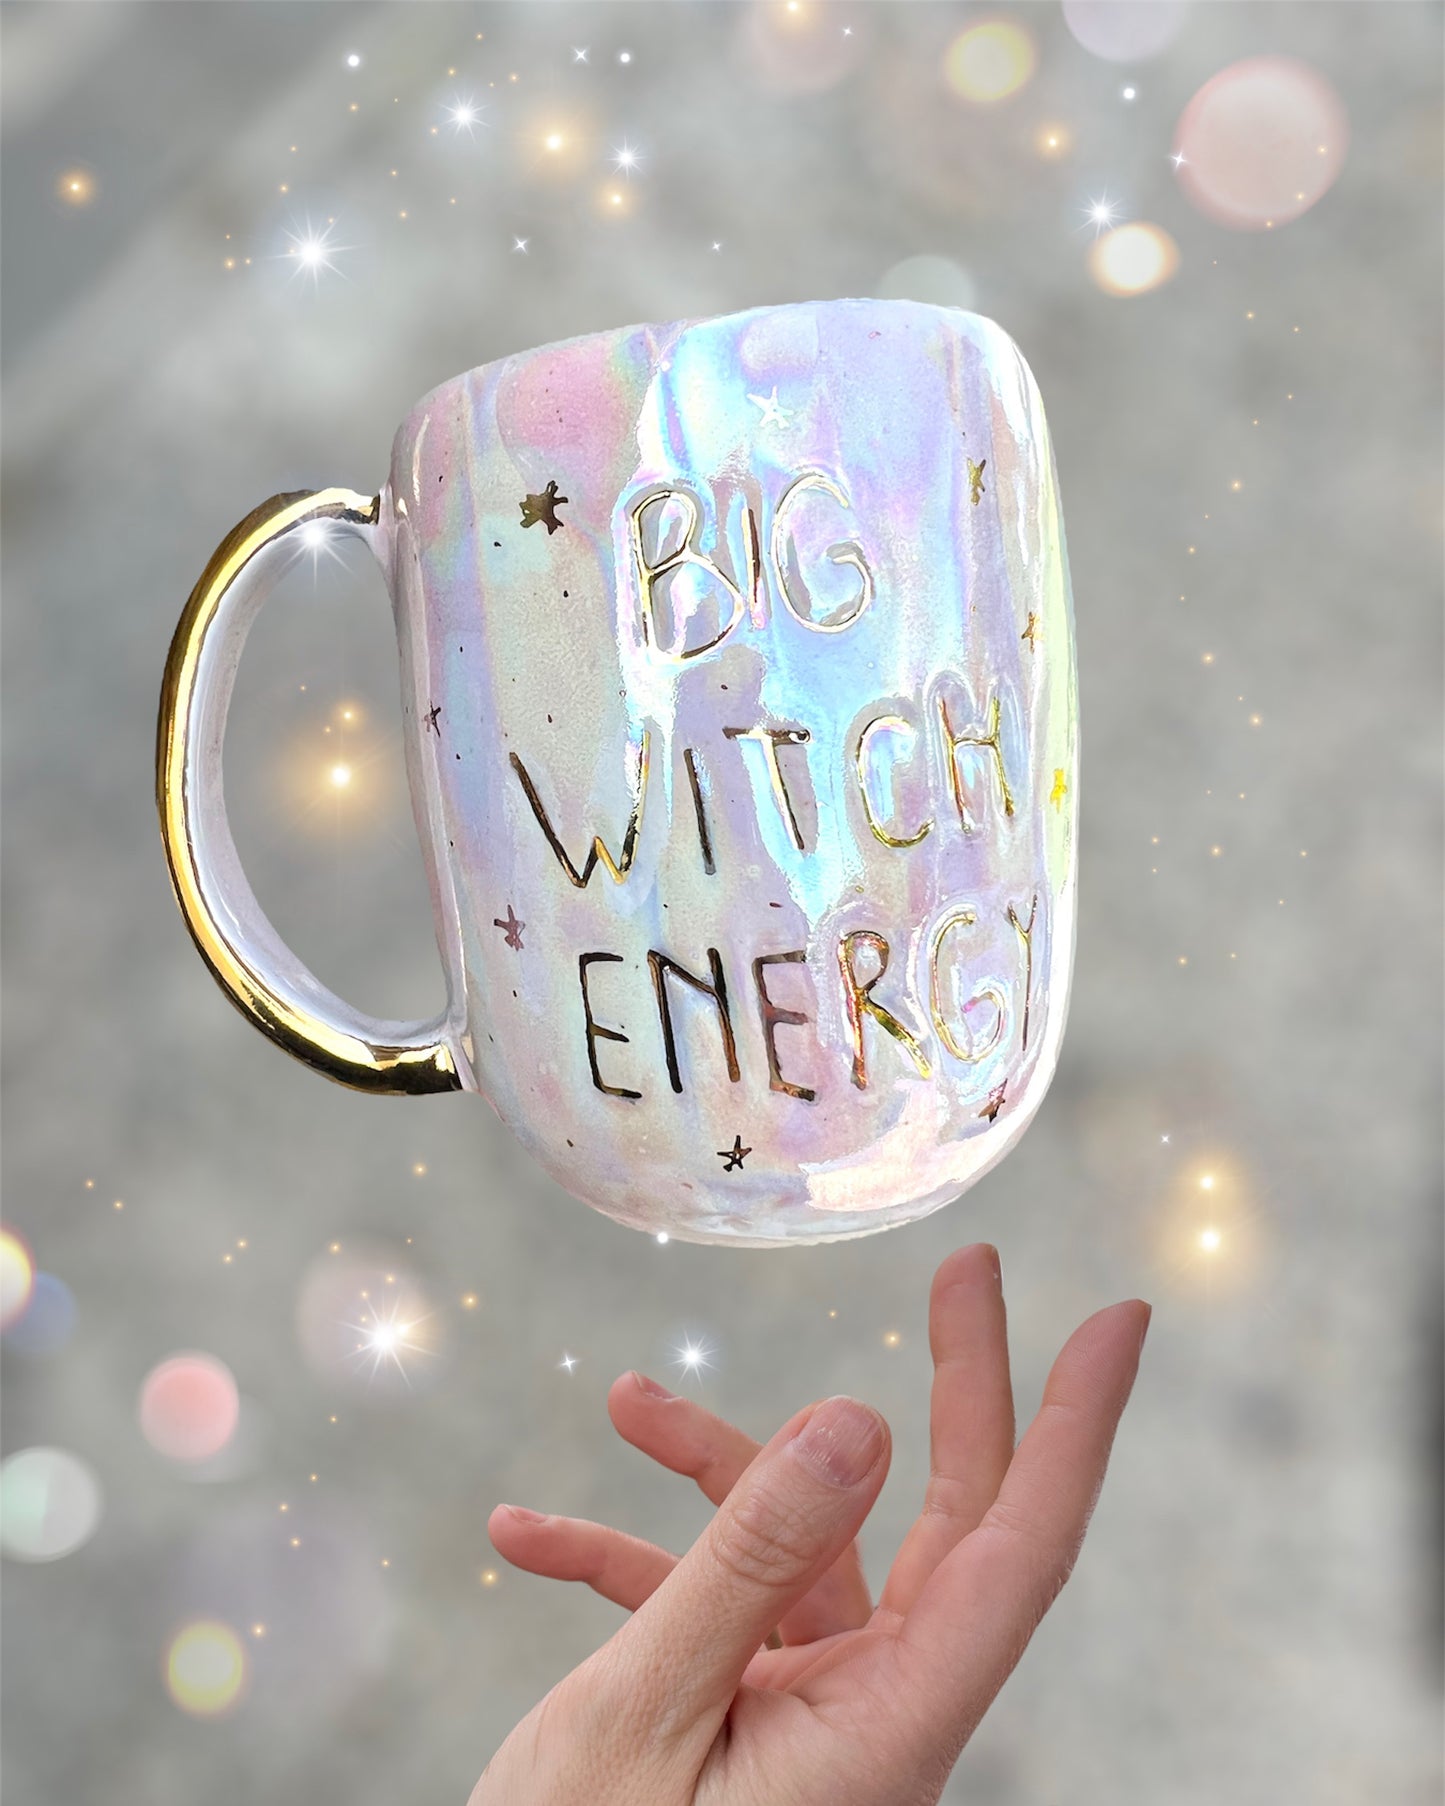 Big Witch Energy 18oz